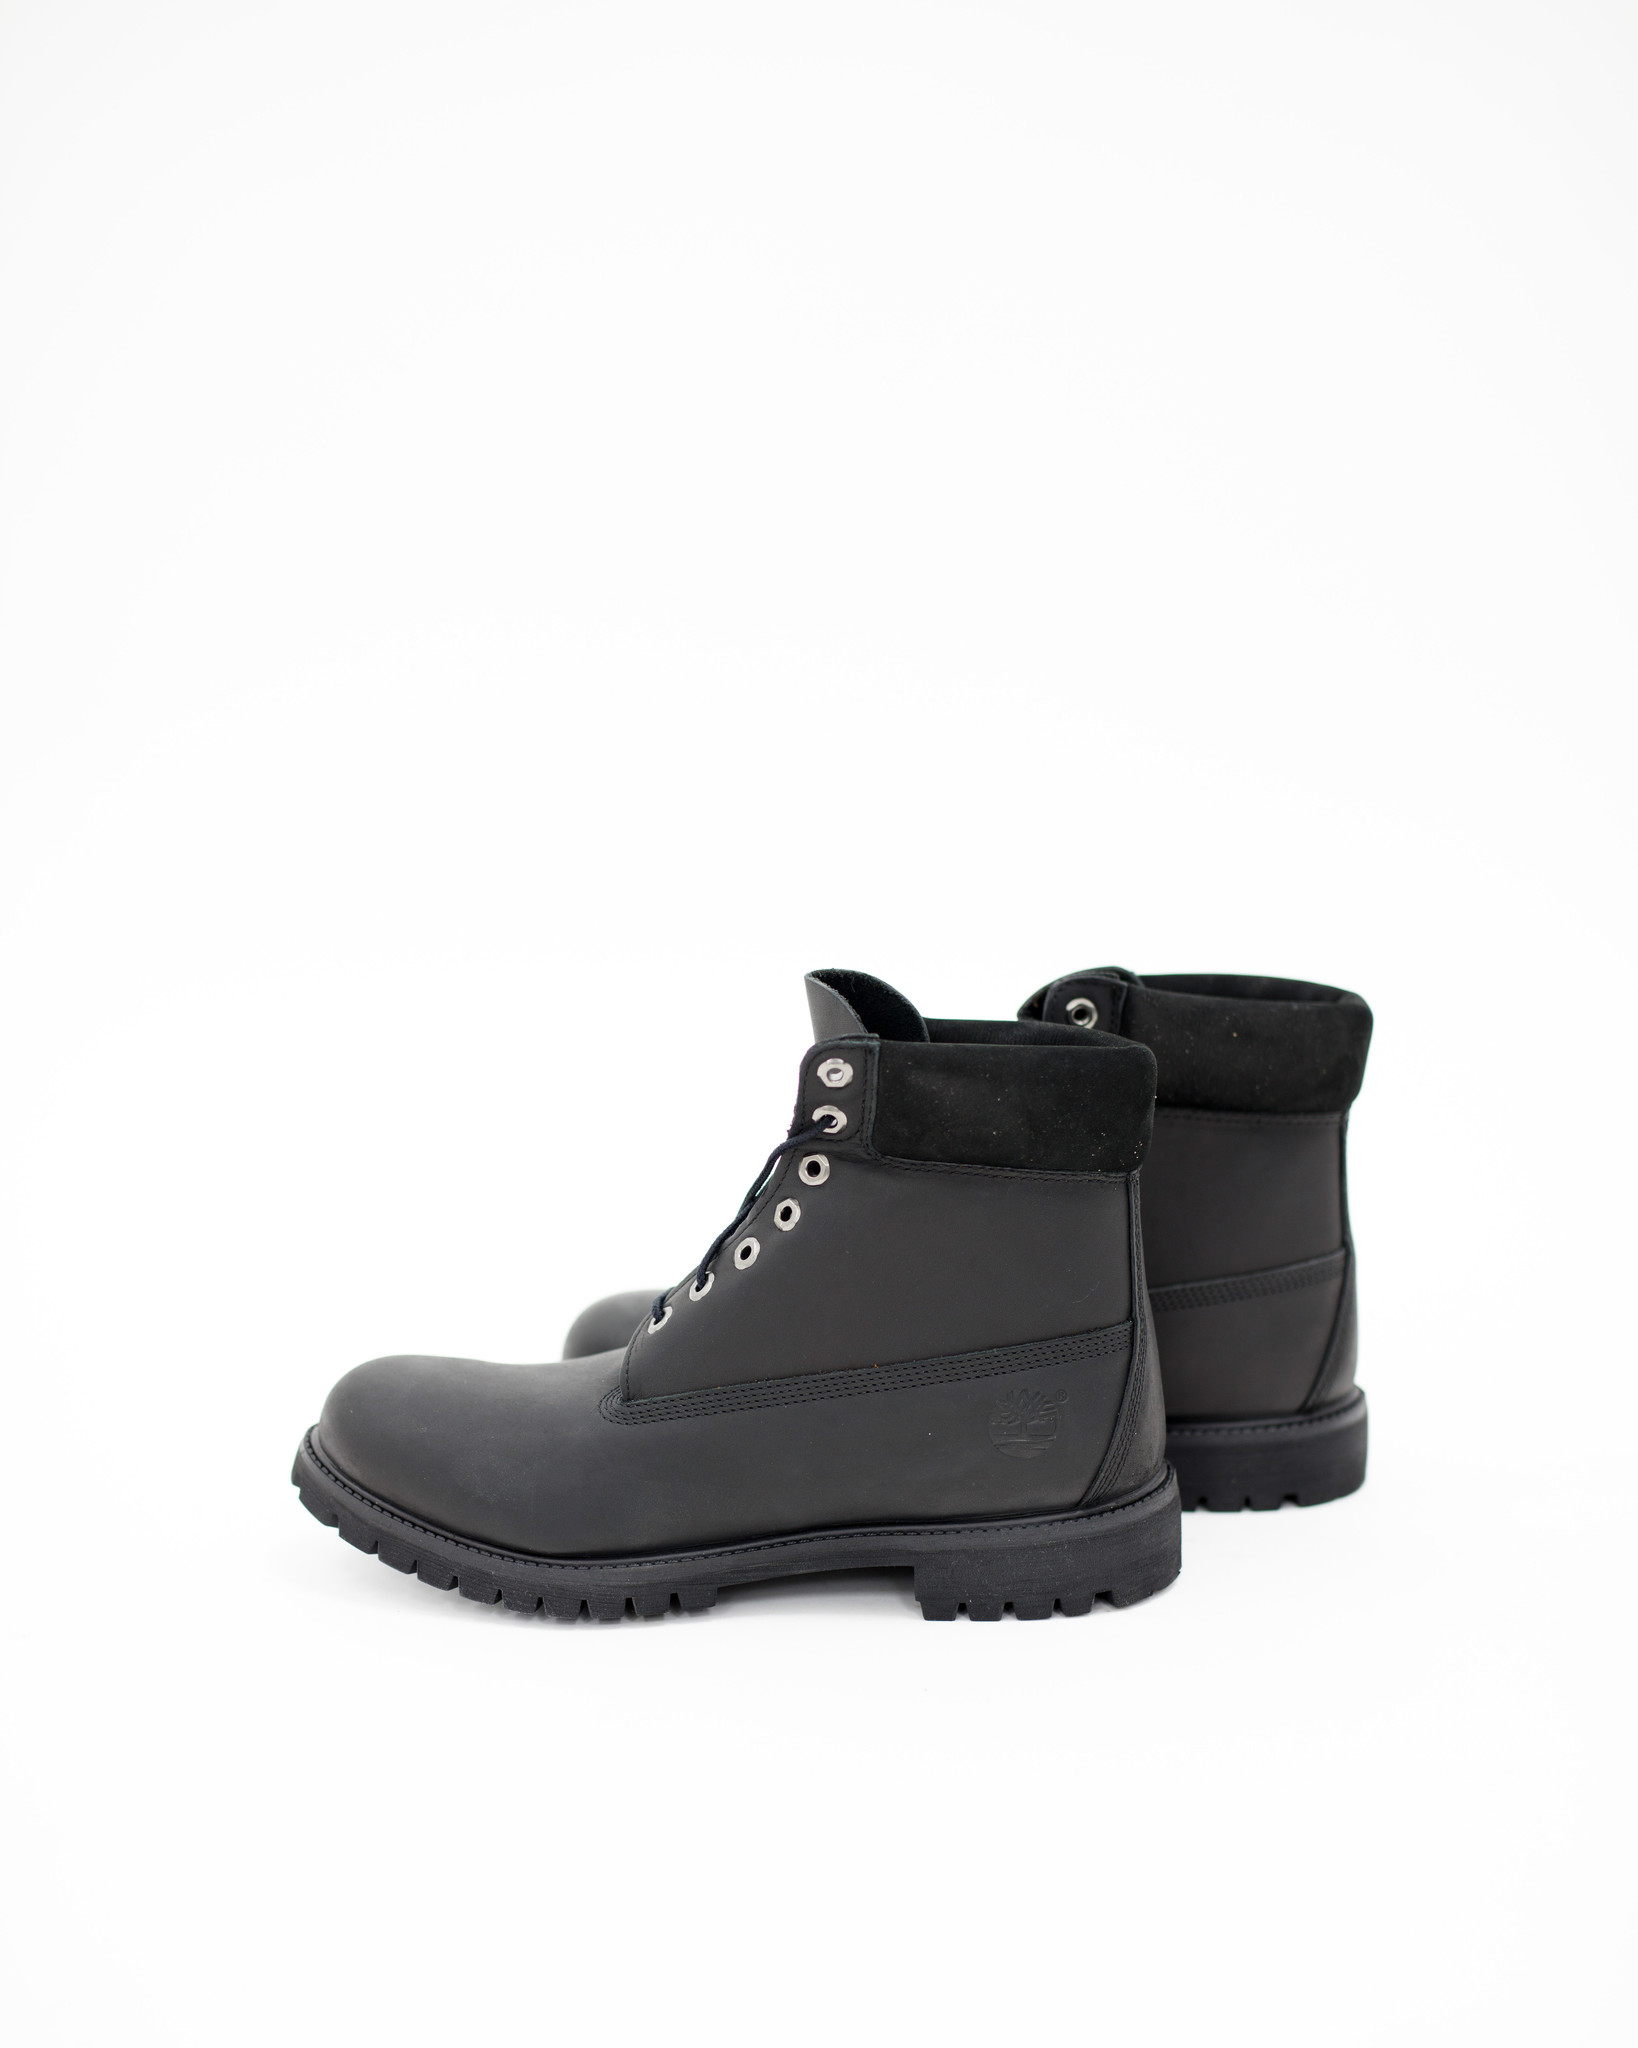 region Kunde Ydeevne Timberland 6-Inch Premium Waterproof Boot 'Black Nubuck'|Top Fashion - Top  Fashion